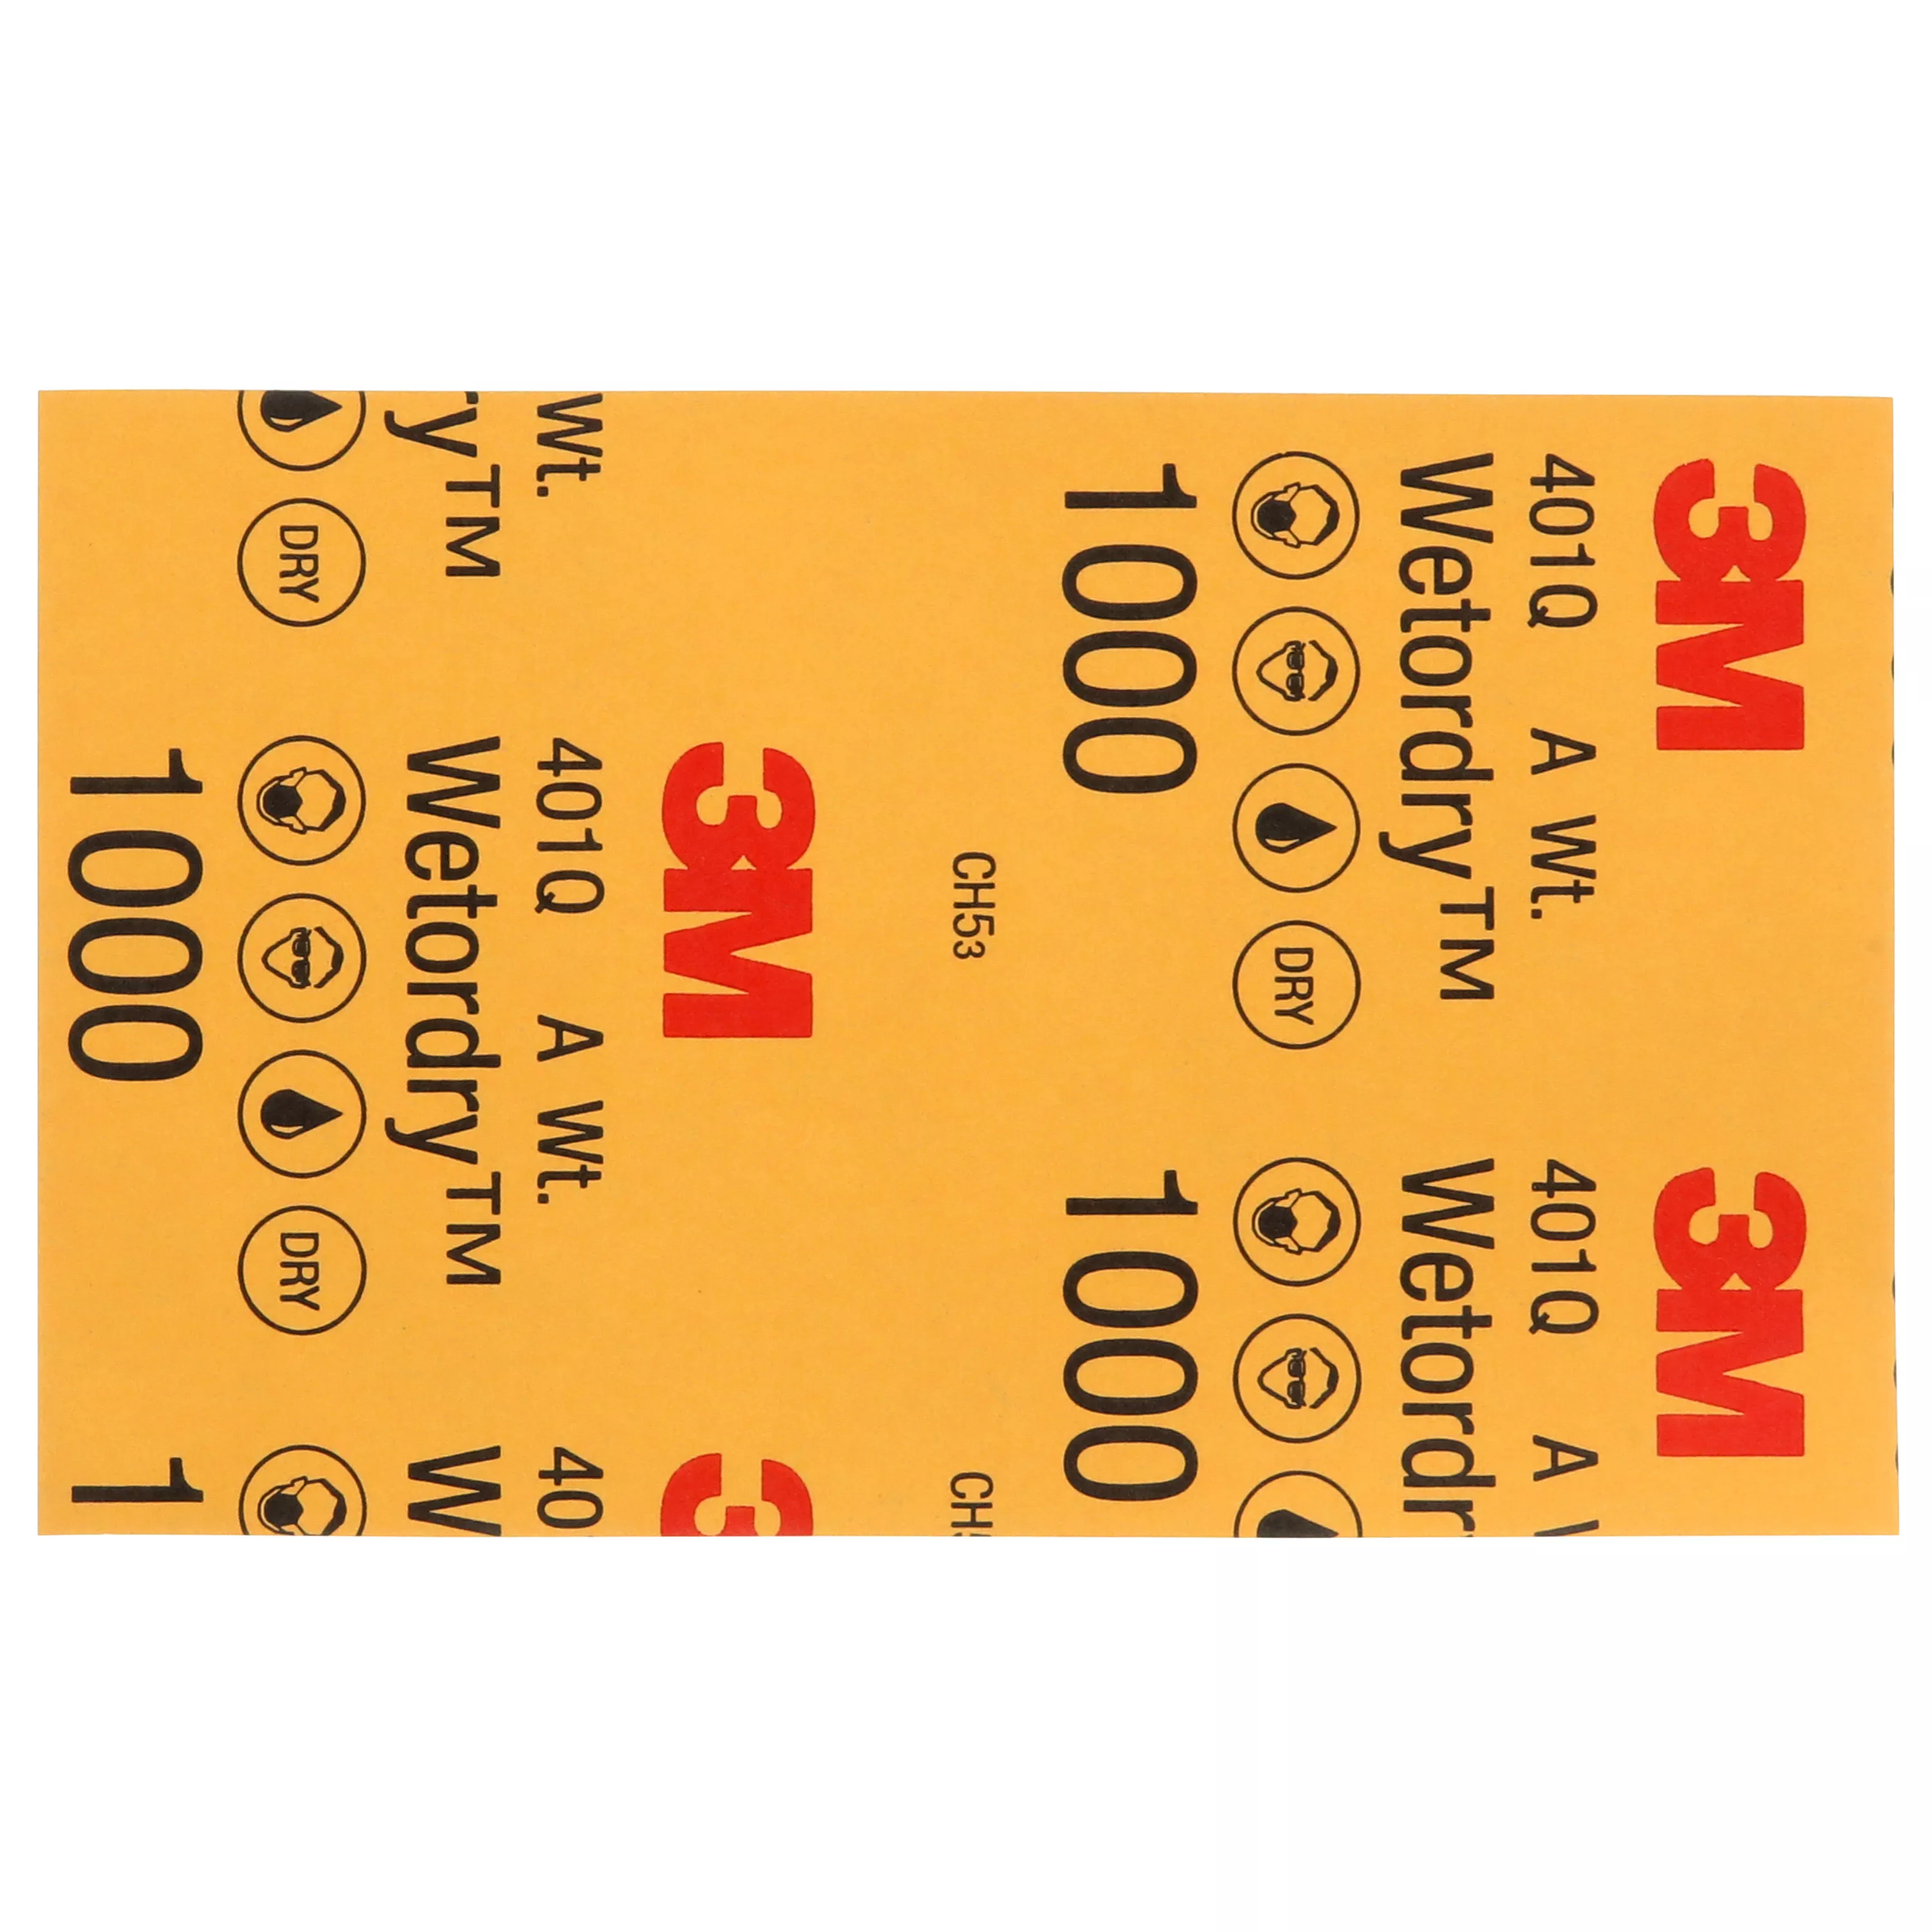 SKU 7000042501 | 3M™ Wetordry™ Abrasive Sheet 401Q